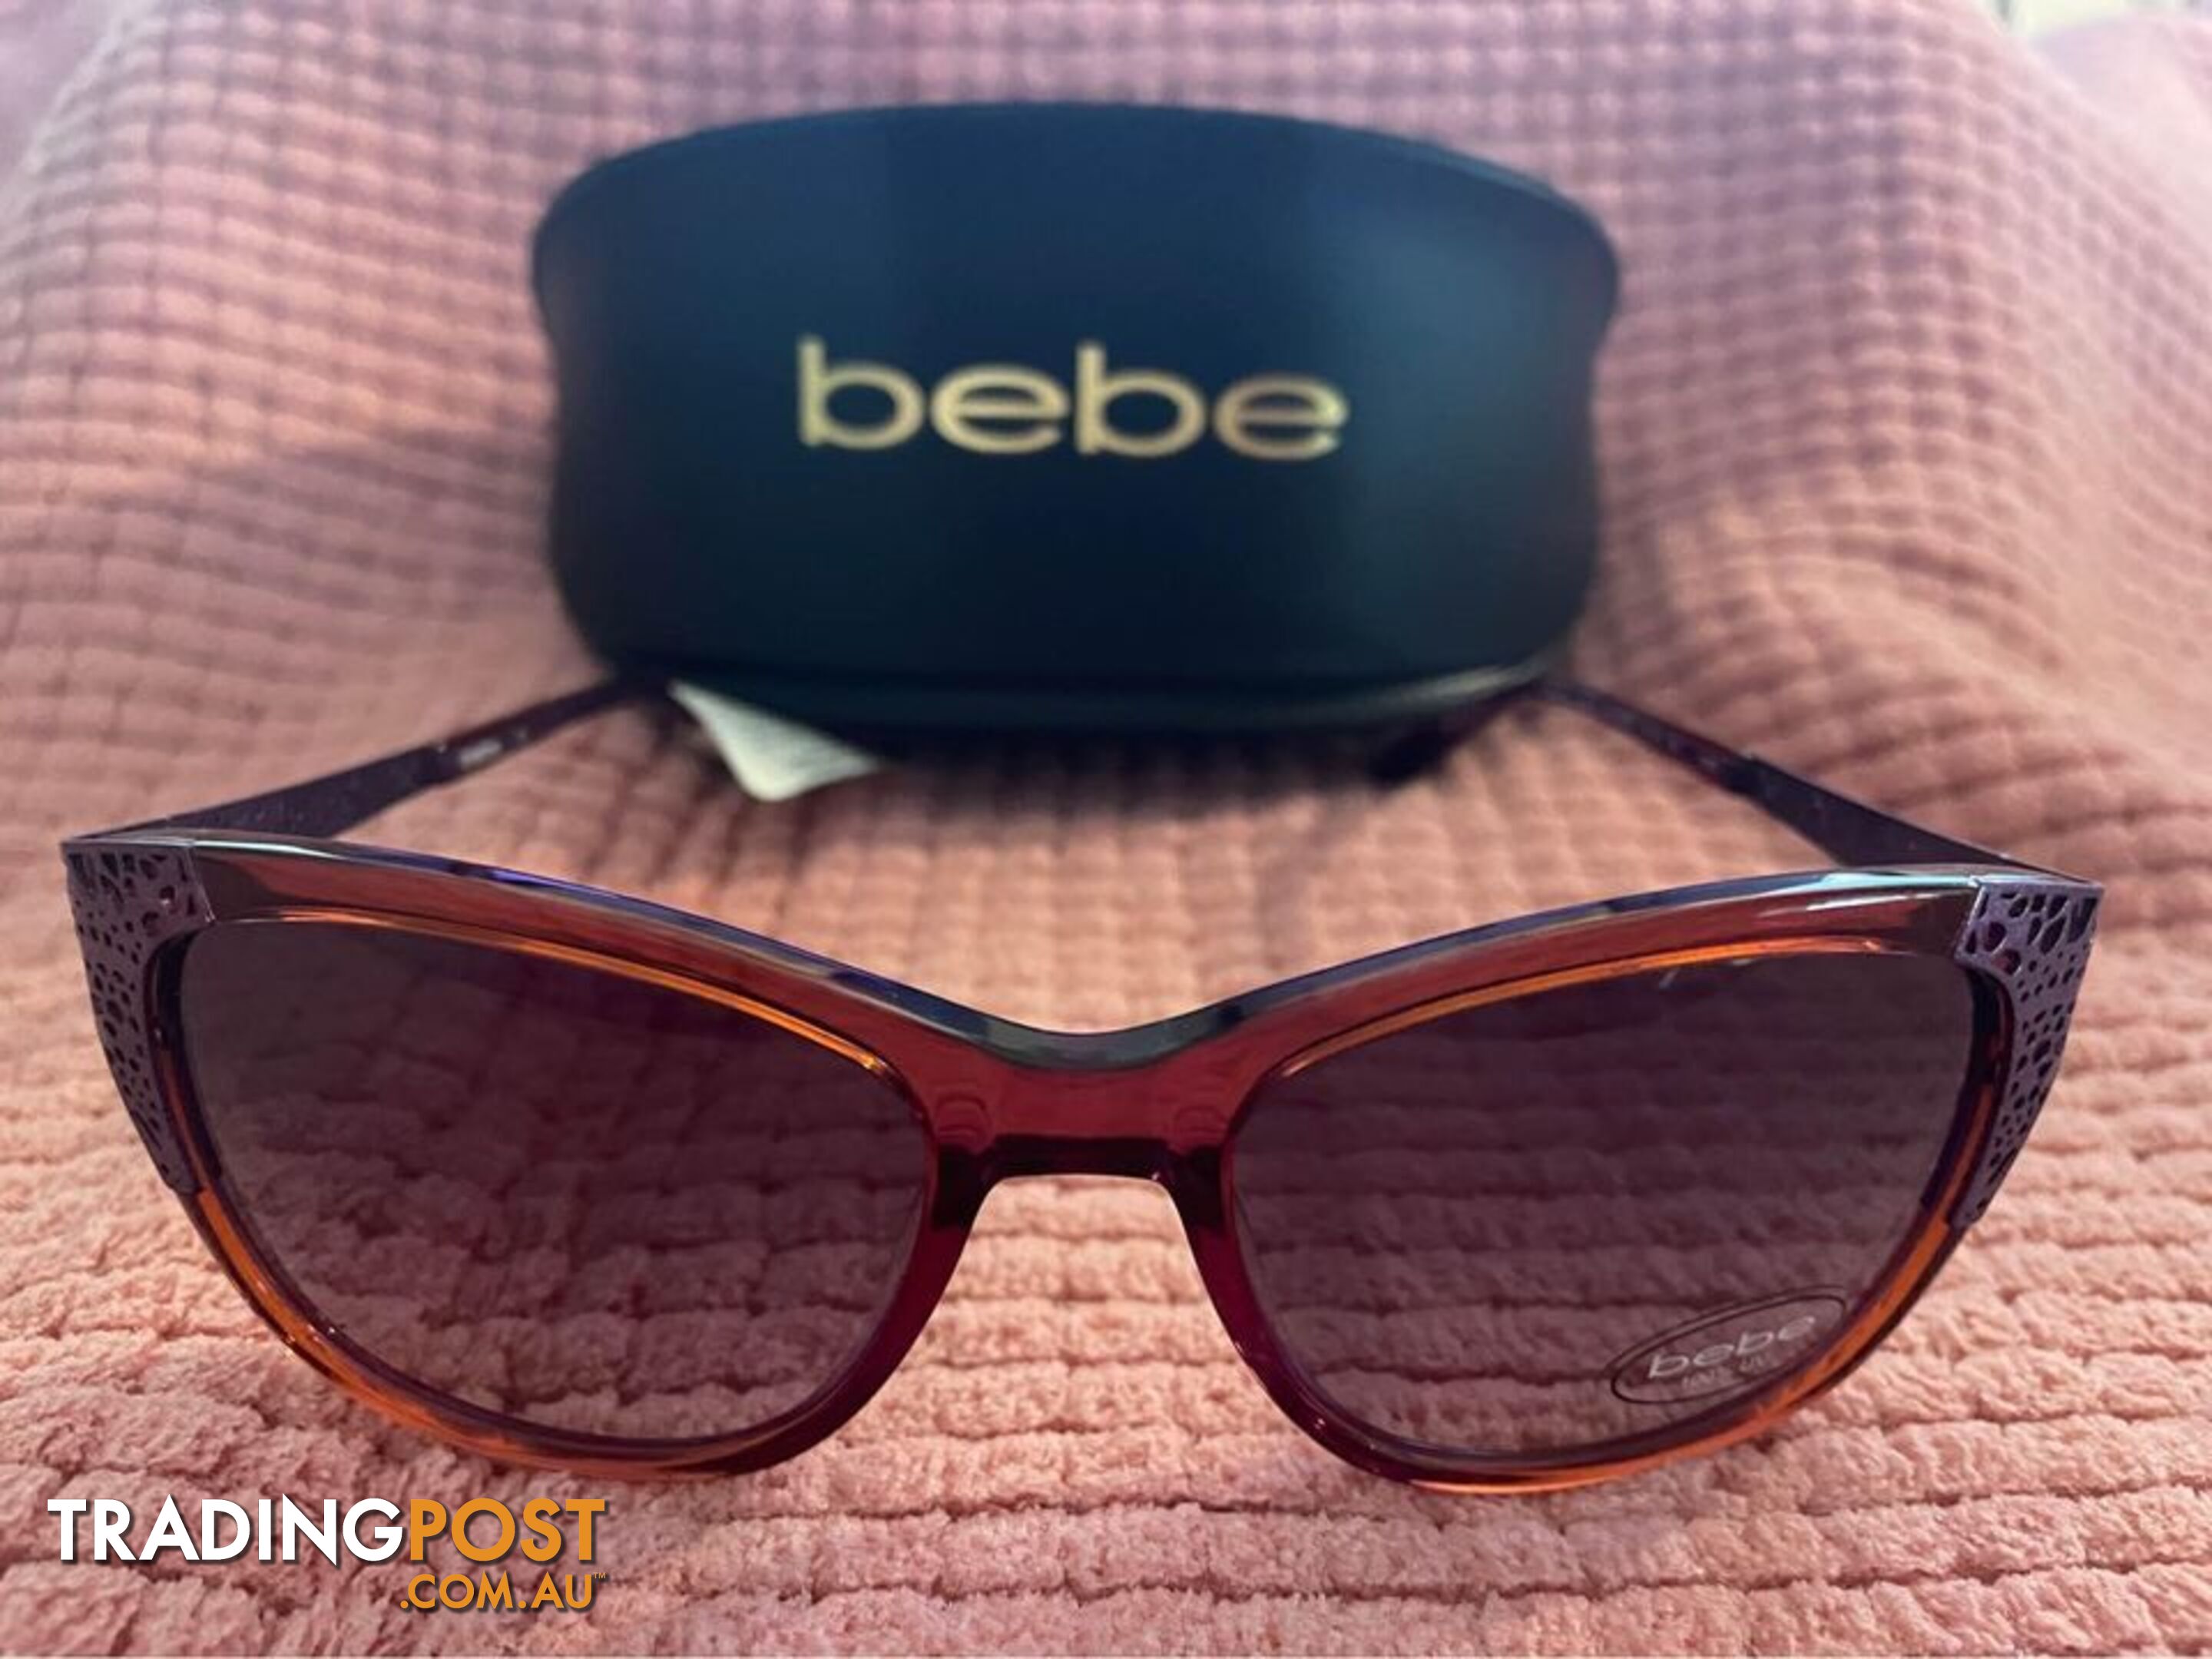 Ladies Bebe sunglasses. Brand new.